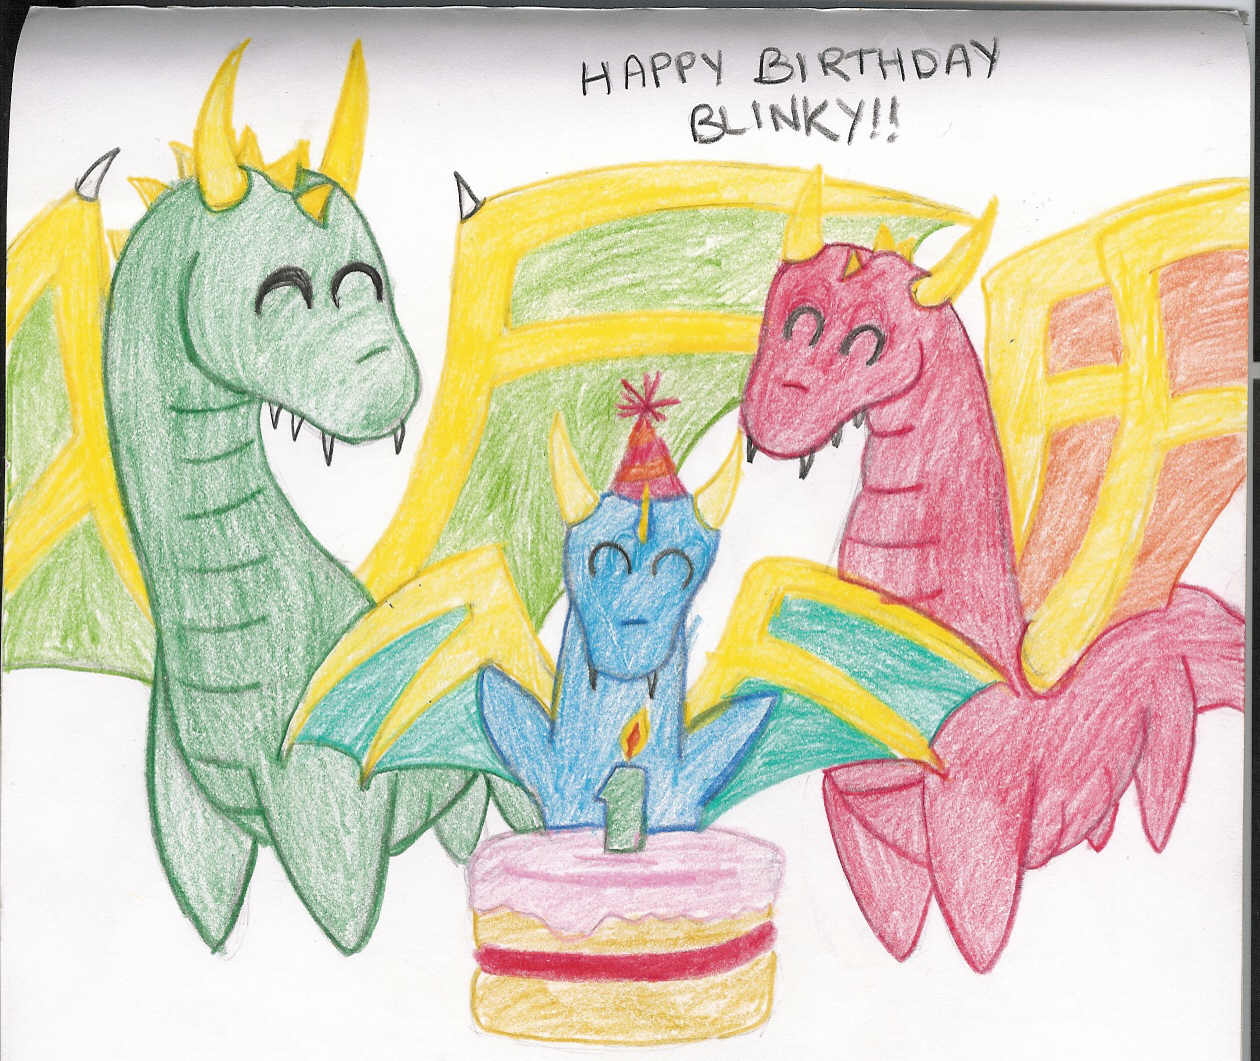 Happy Birthday Blinky!! ^O^ by Frost_Dragon